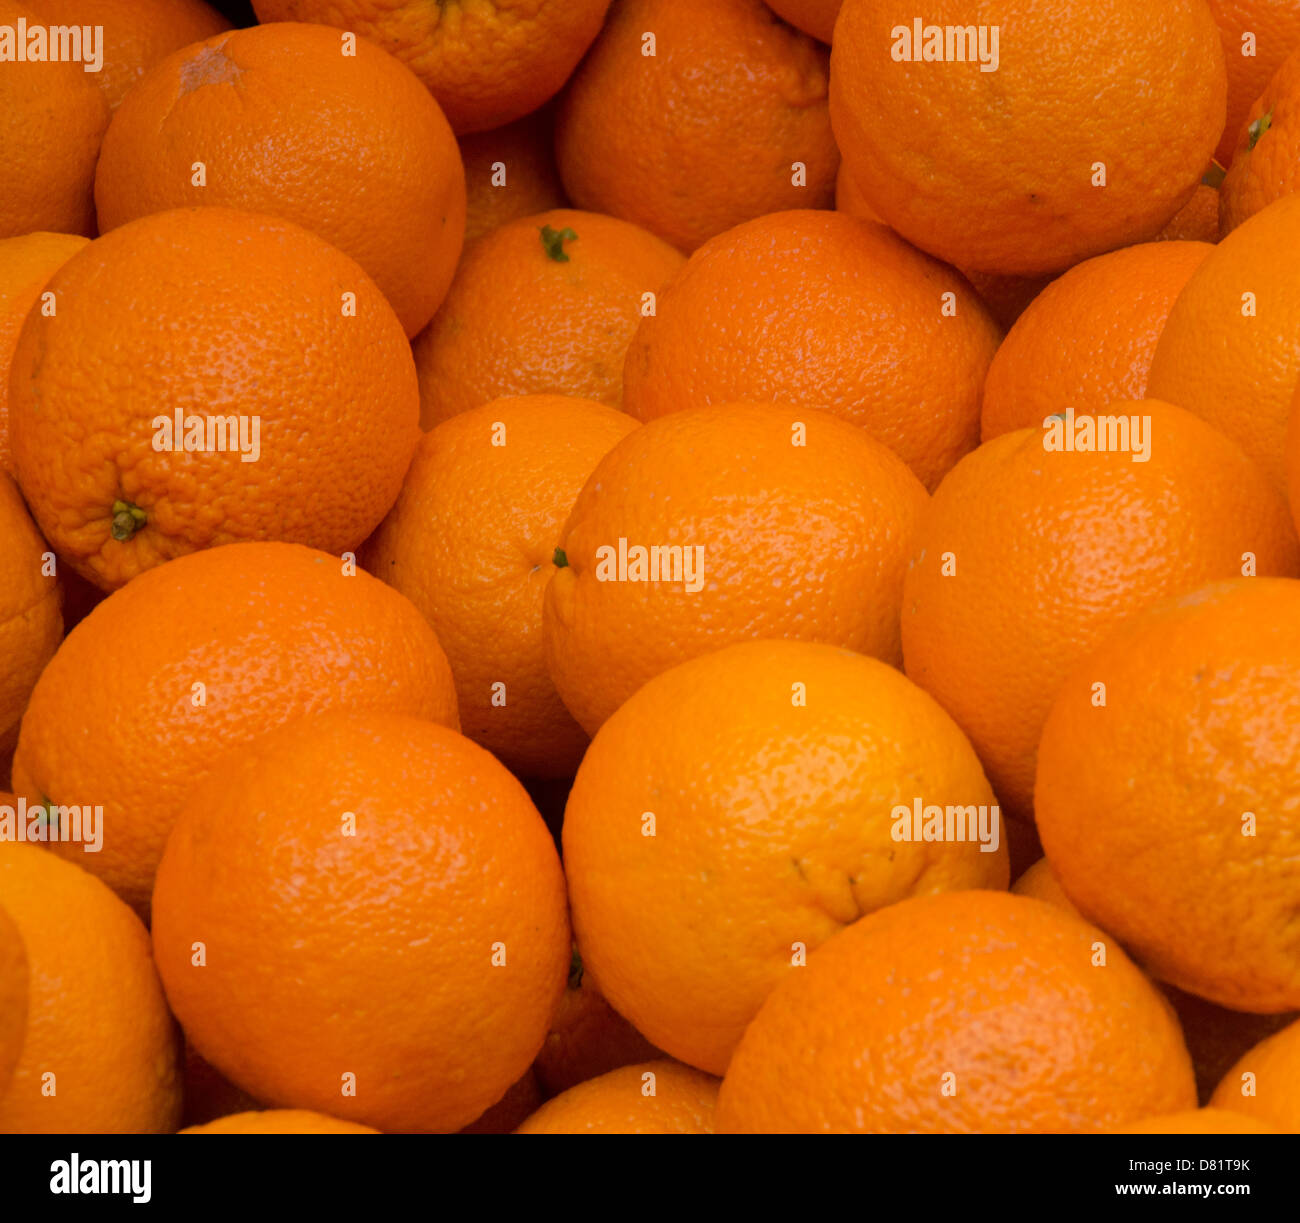 Oranges on market Stock Photo